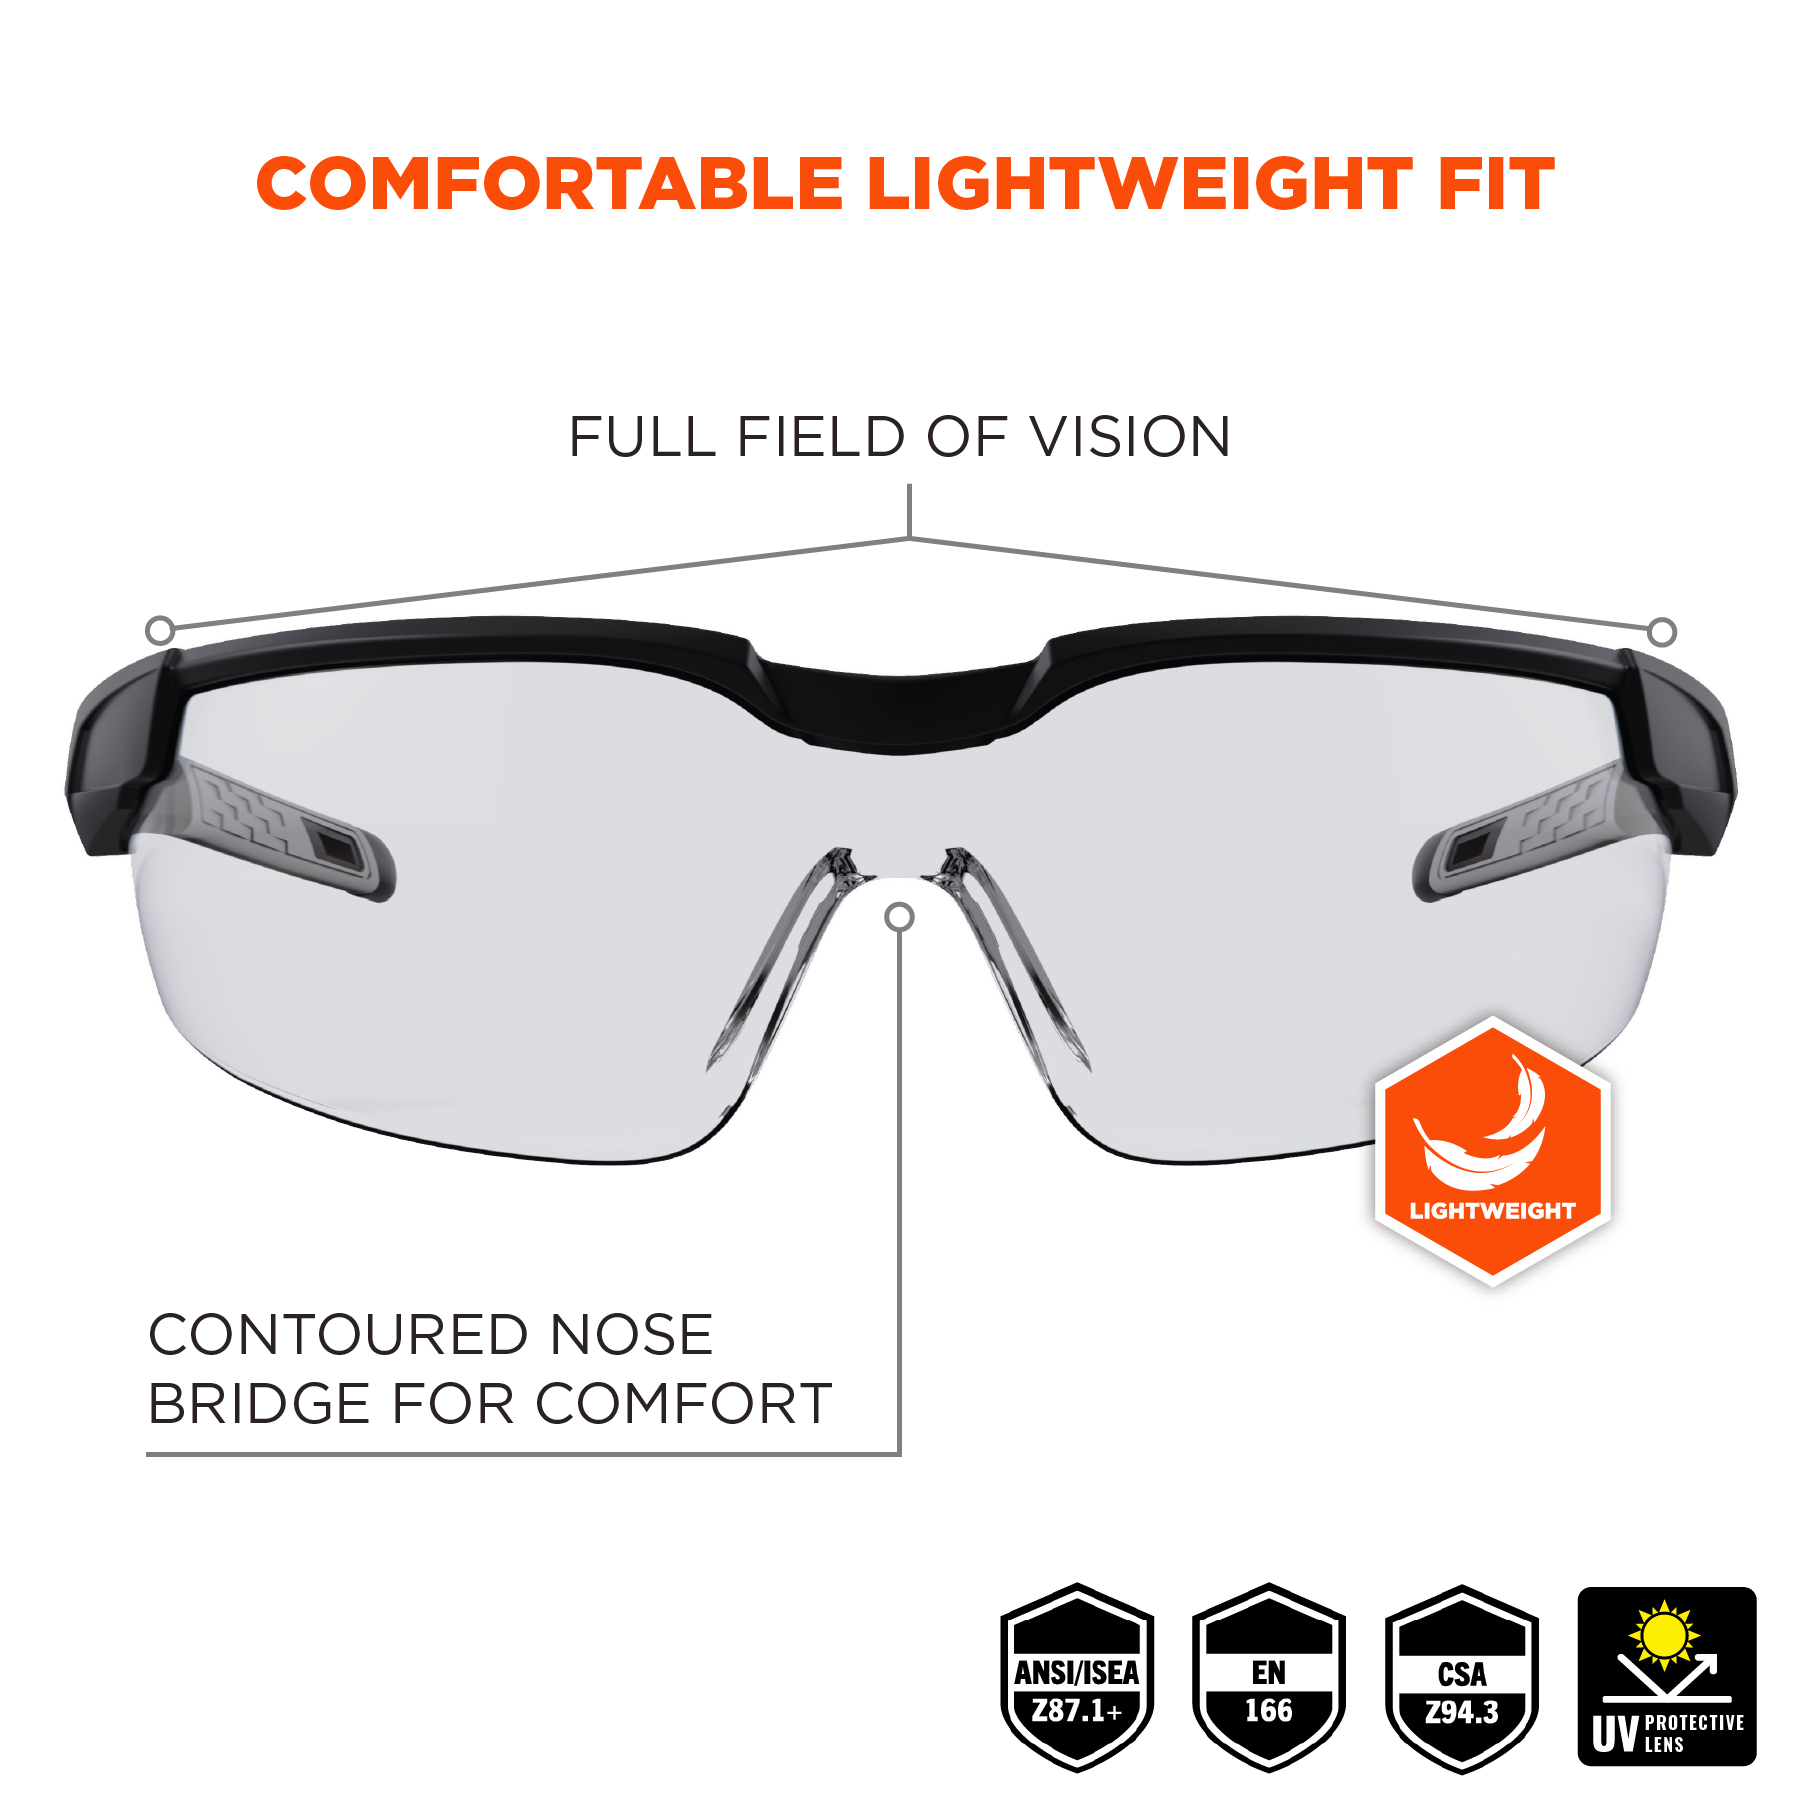 https://www.ergodyne.com/sites/default/files/product-images/50066-dellenger-safety-glasses-comfortable-lightweight-fit-afas-clear.jpg